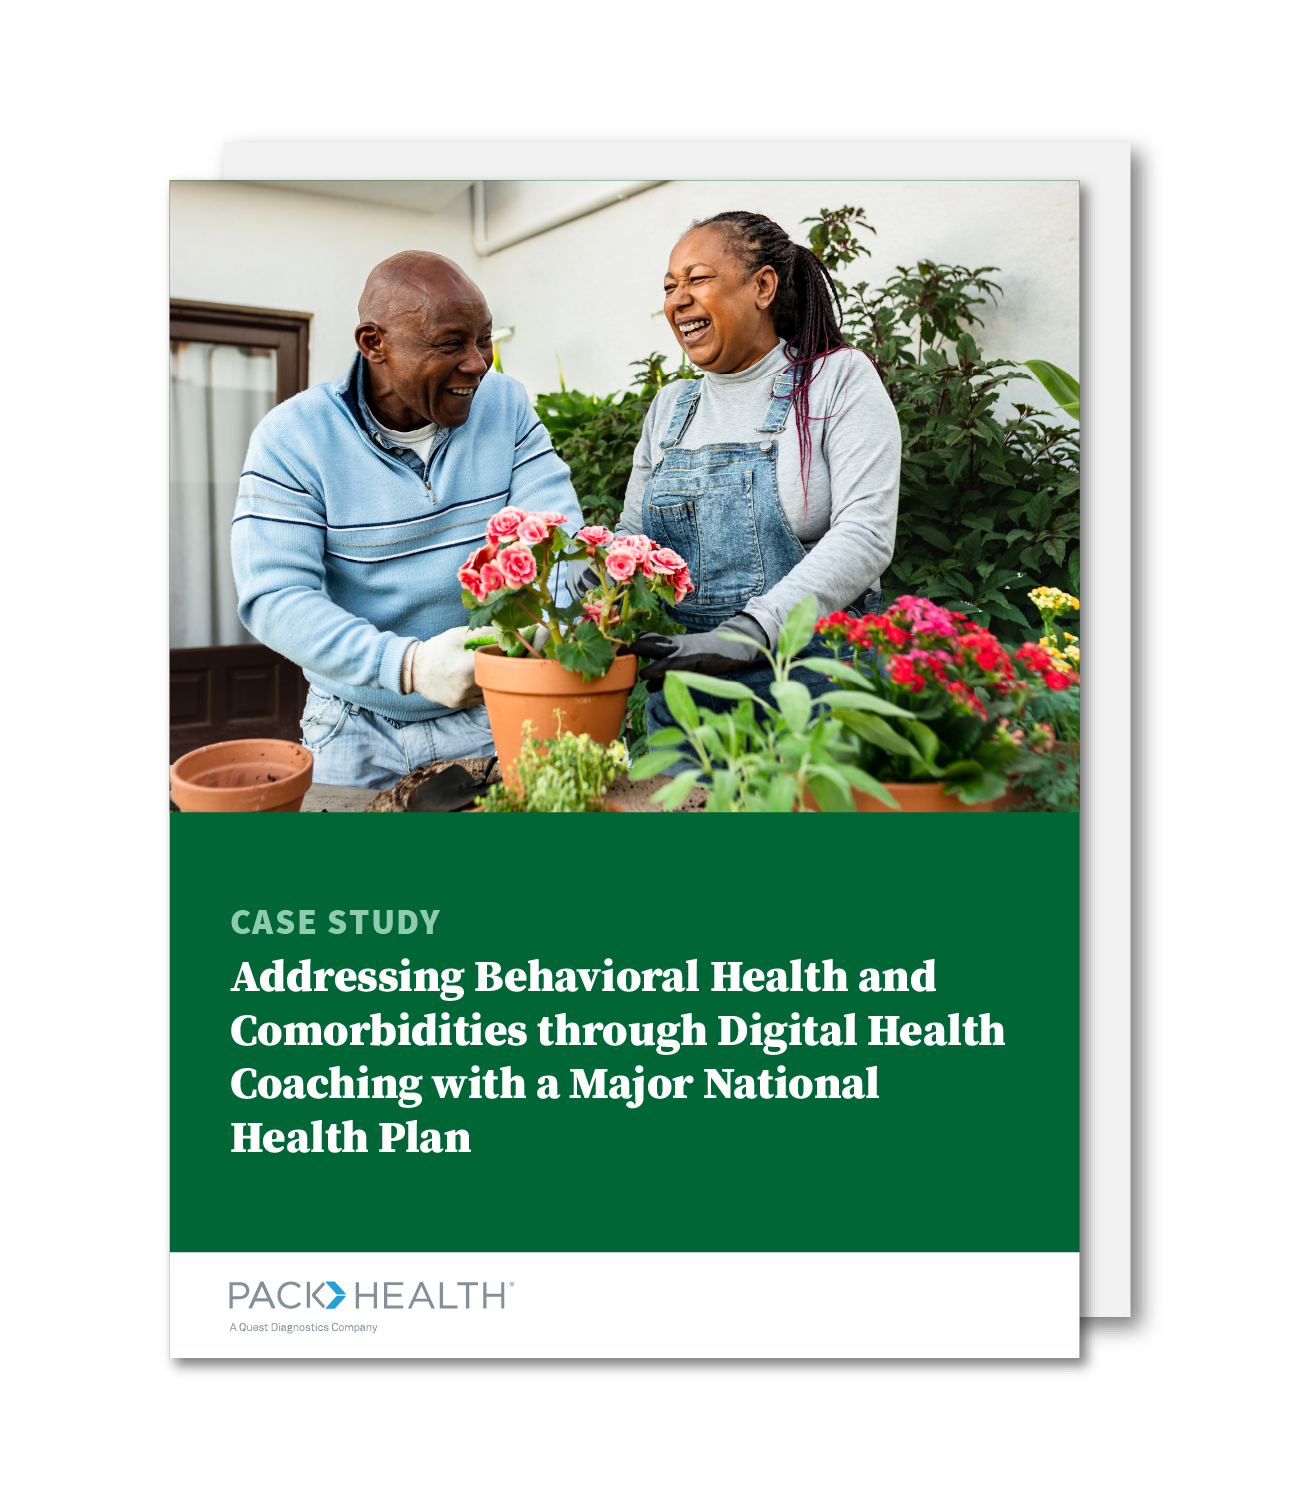 Case Study: Addressing Behavioral Health Comorbidities through Digital Health Coaching with a Major National Health Plan